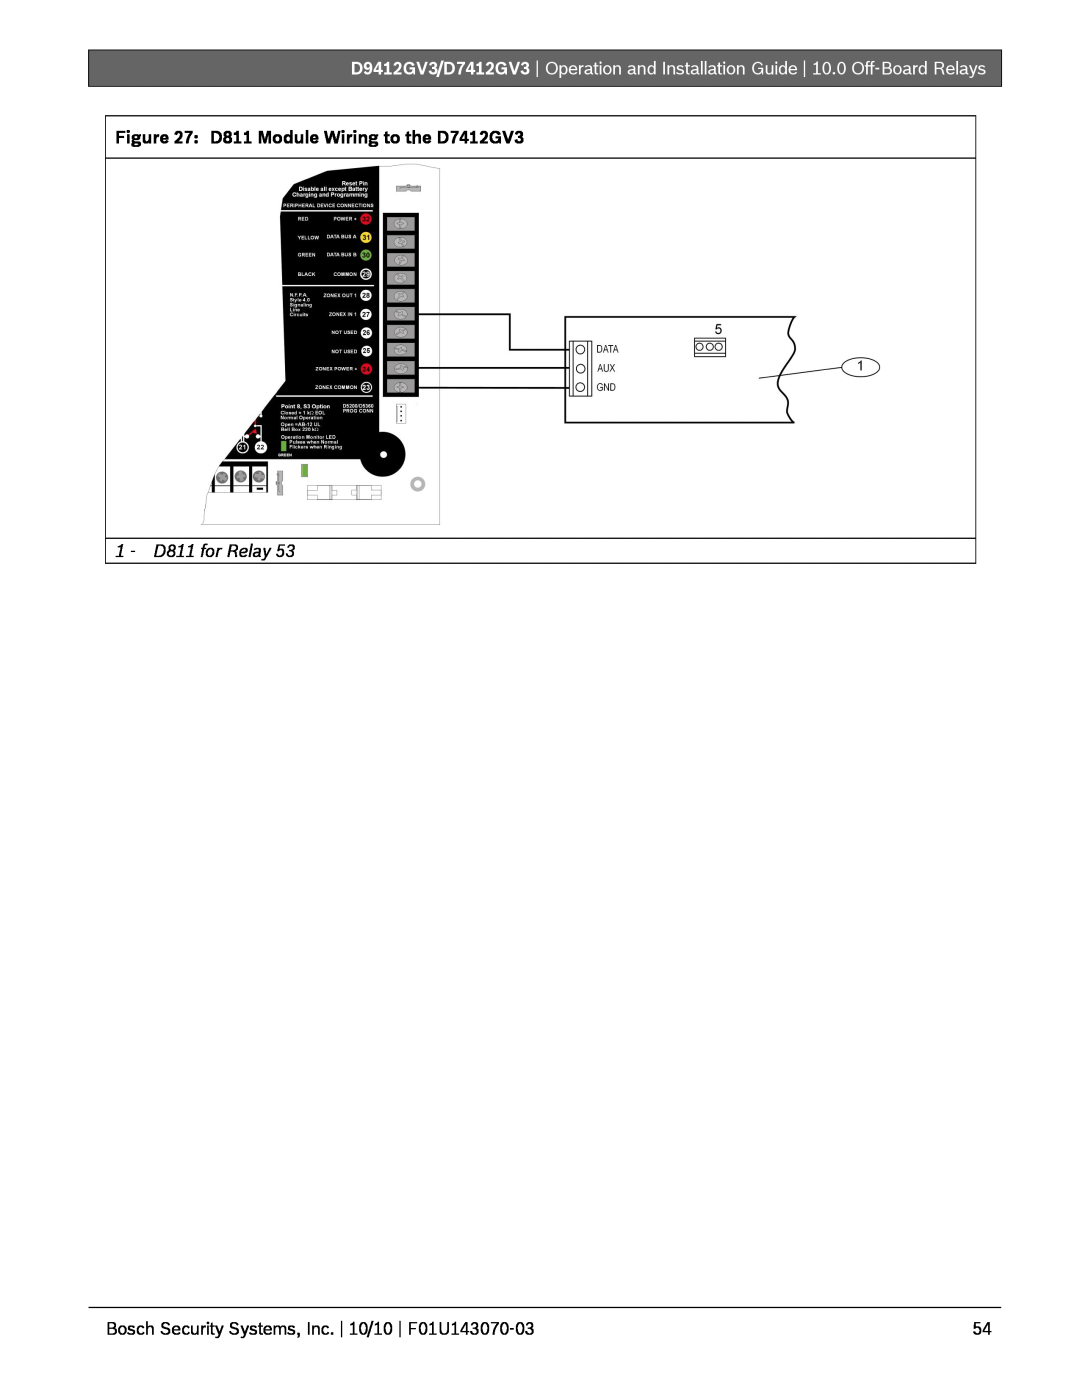 Bosch Appliances D9412GV3 manual D811 Module Wiring to the D7412GV3 